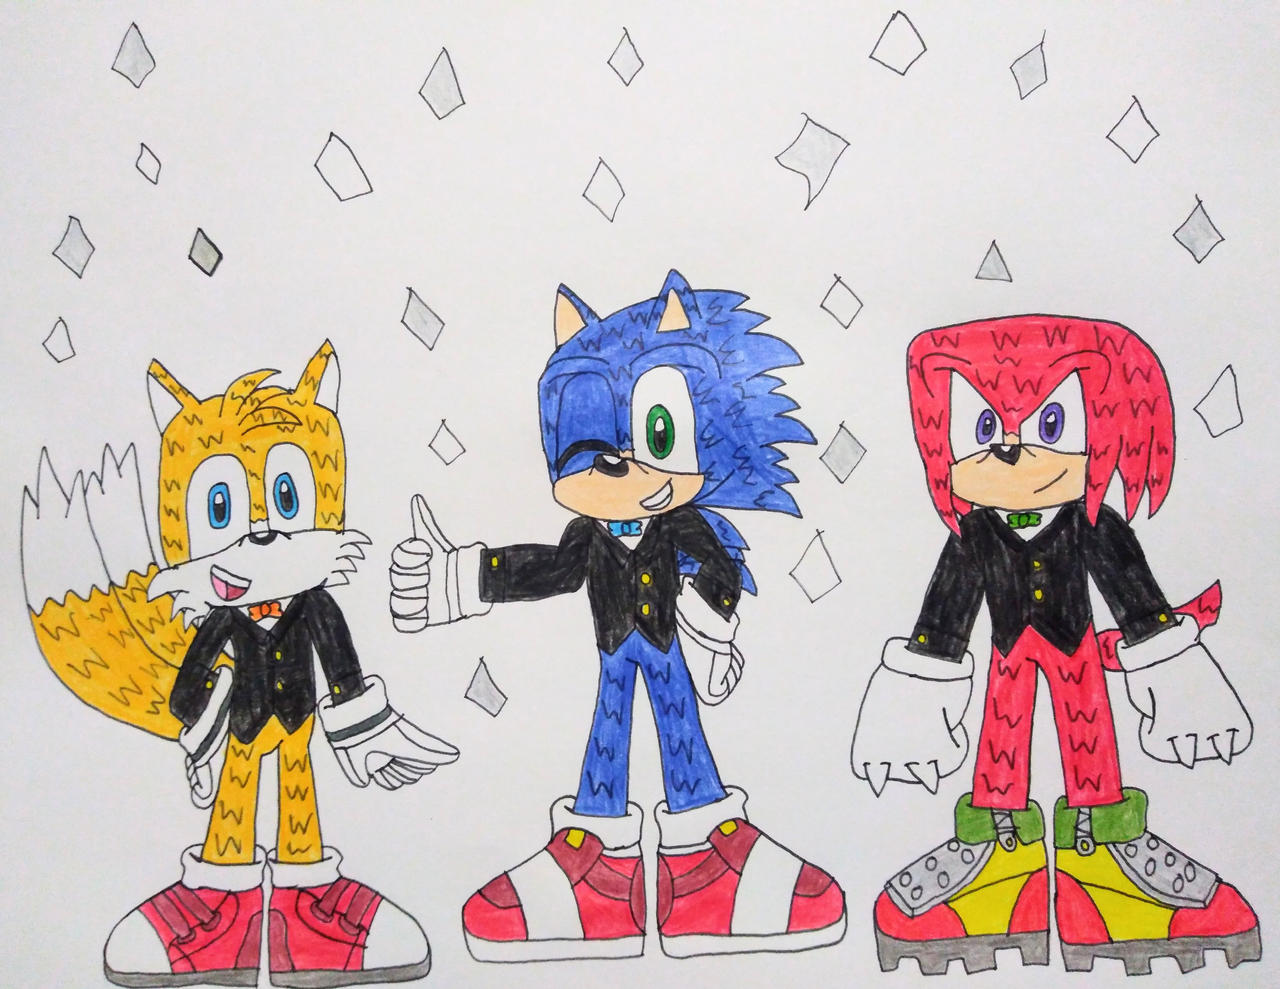 The Sonic 2 The Hedgehog #bonecosonic #sonic2 #sonic #sonicthehedgehog